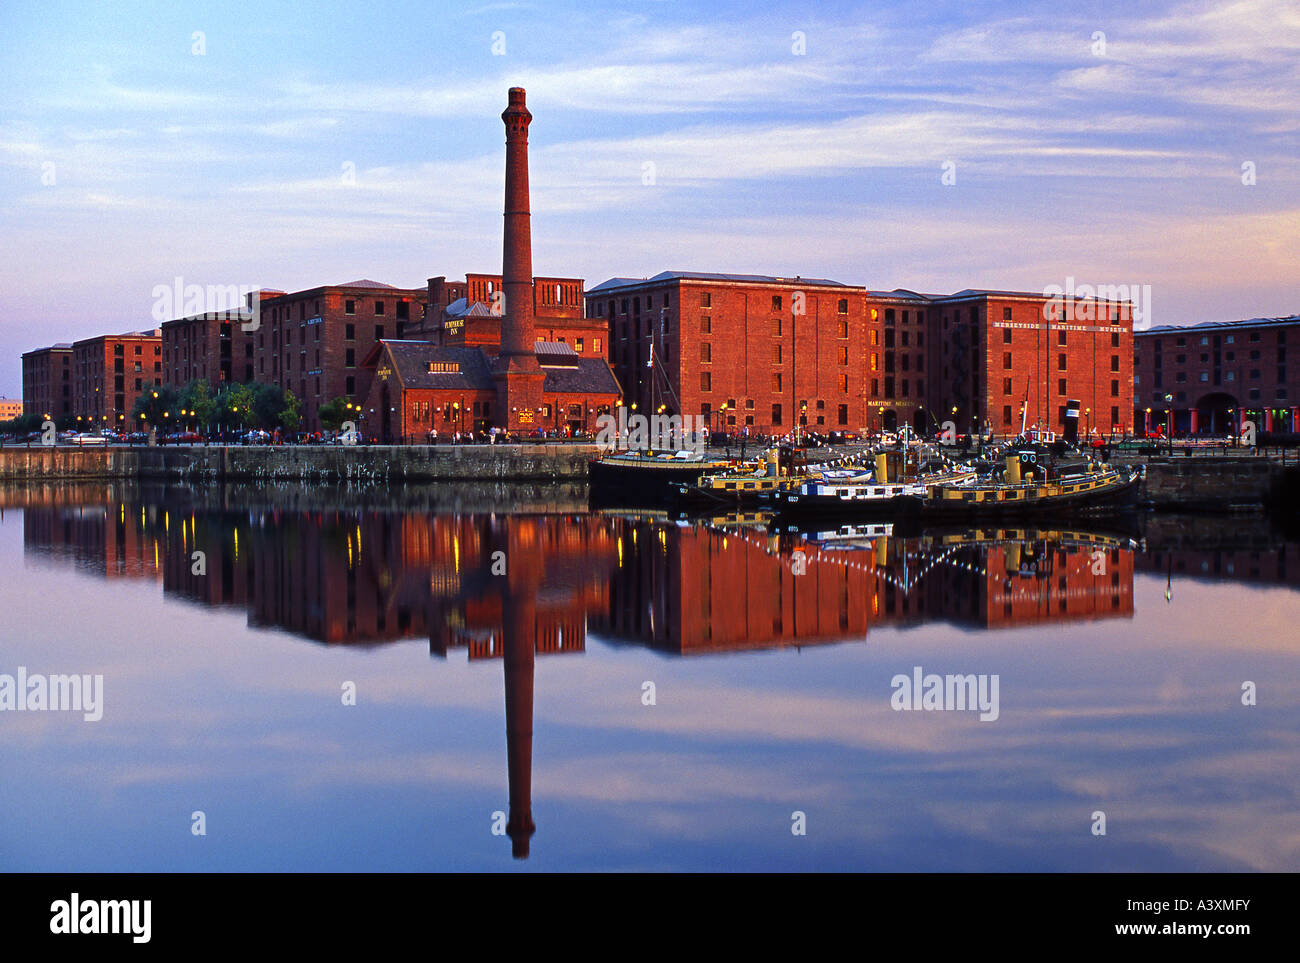 L'Pumphose, Granada TV, Albert Dock bâtiments reflètent dans Canning Dock, Liverpool, Merseyside, England, UK Banque D'Images